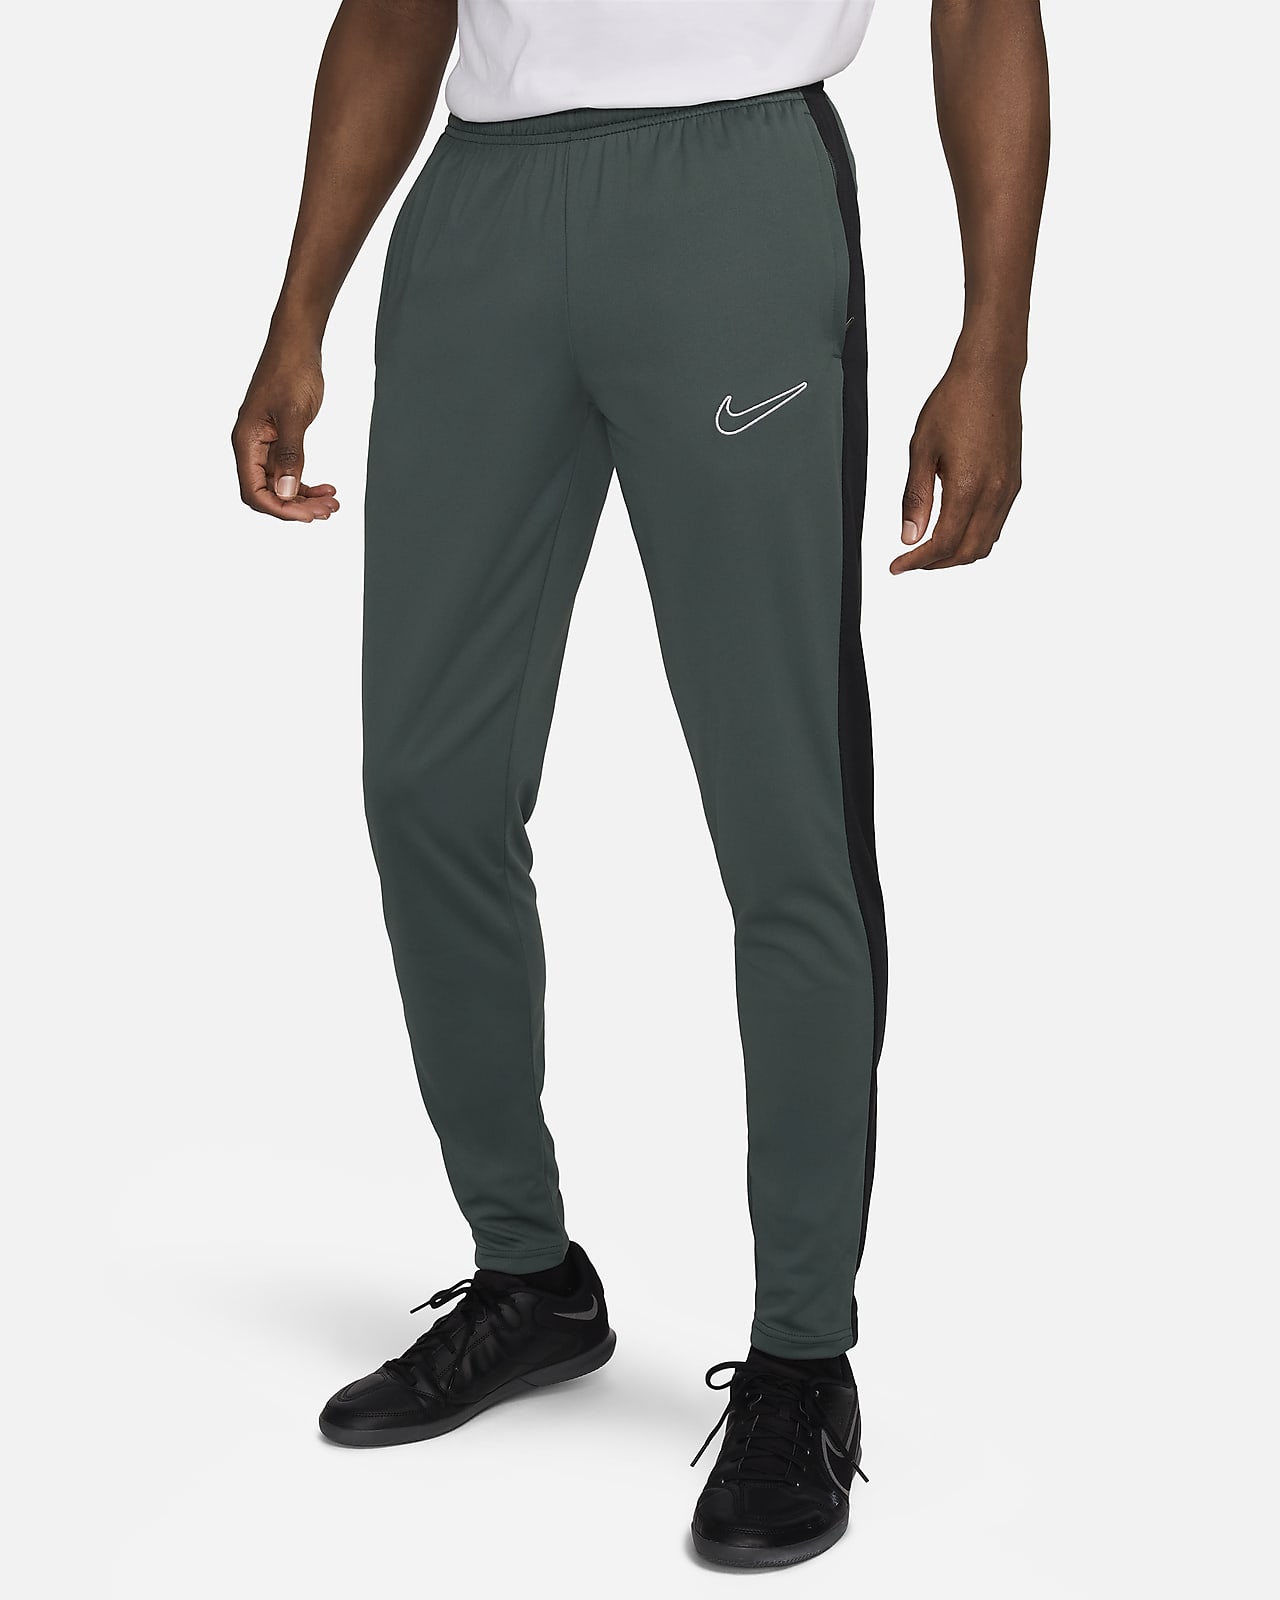 Nike Vapor Varsity Football Pants, 75,00 €